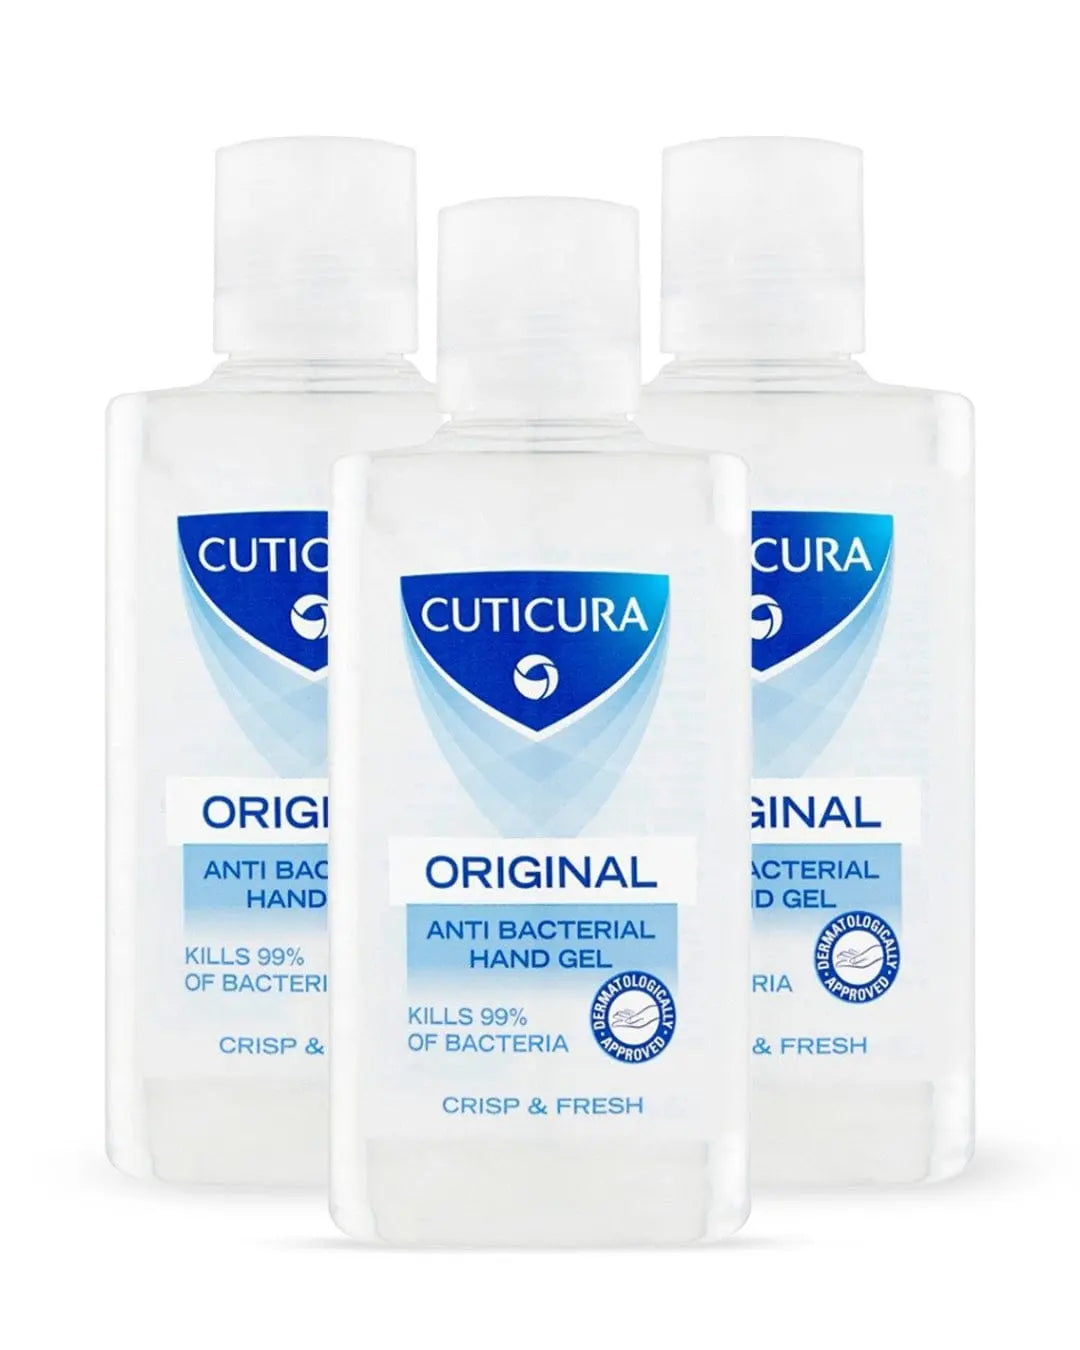 Cuticura Hand Sanitiser (58% Alc.) Multipack, 3 x 150 ml Hand Sanitizers